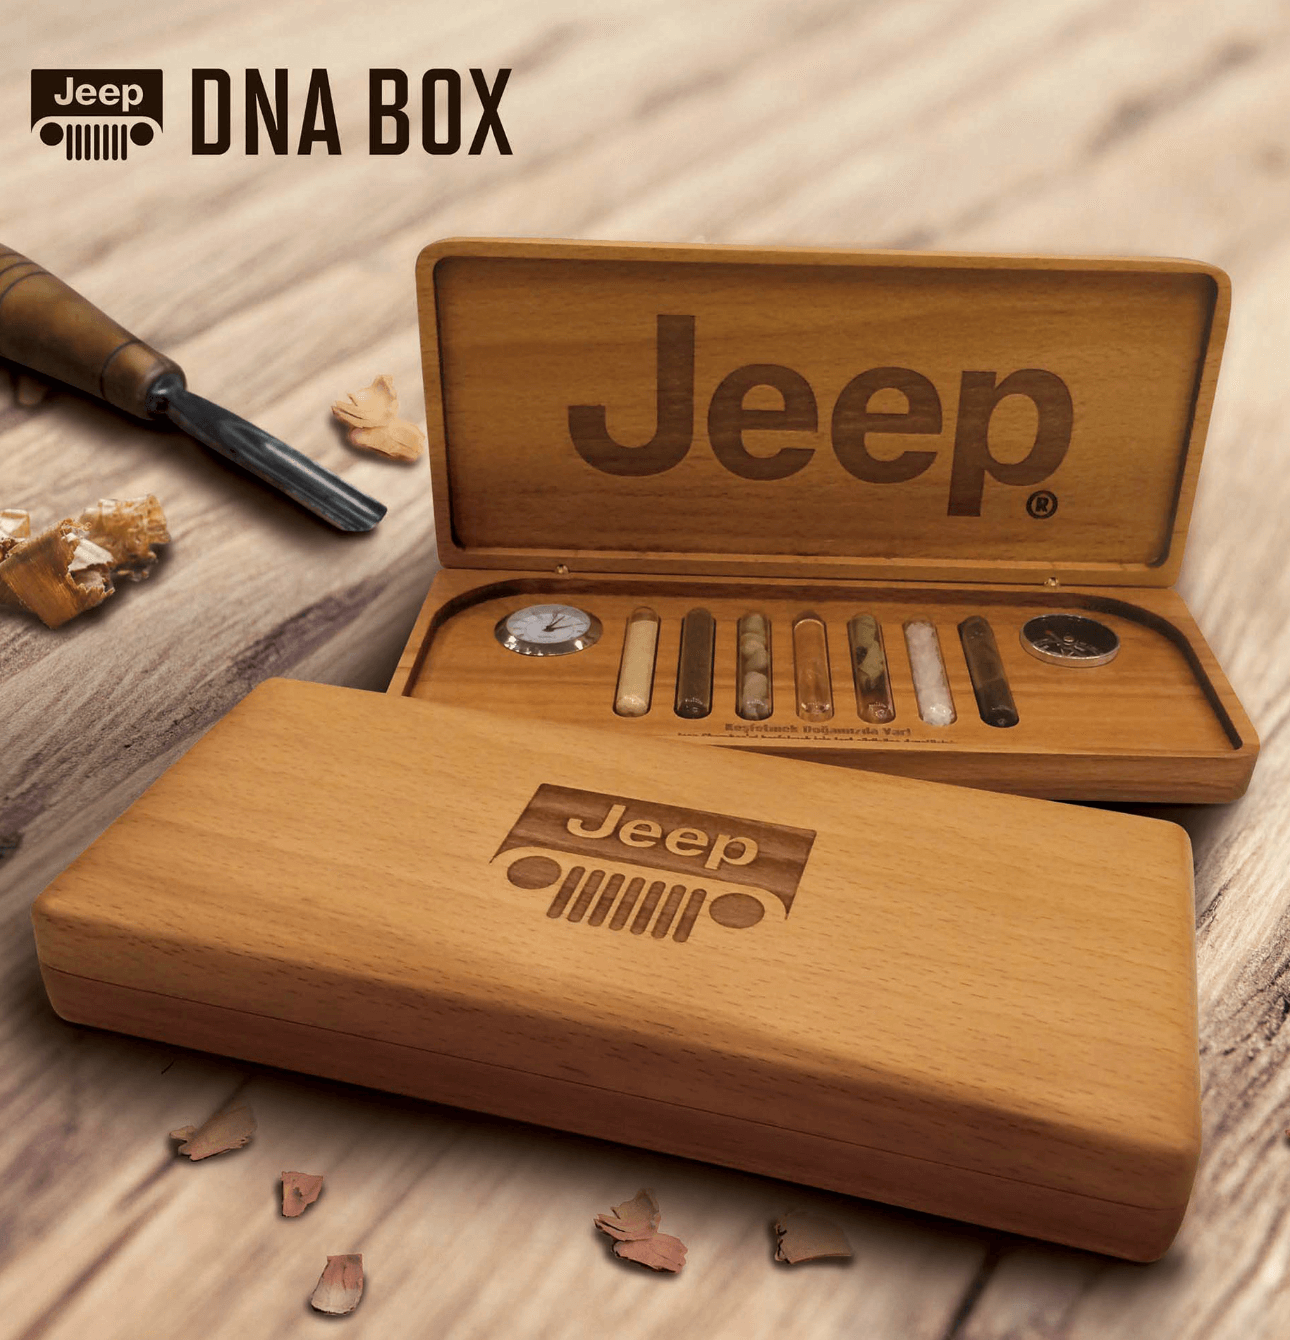 Jeep DNA box direct mail campaign